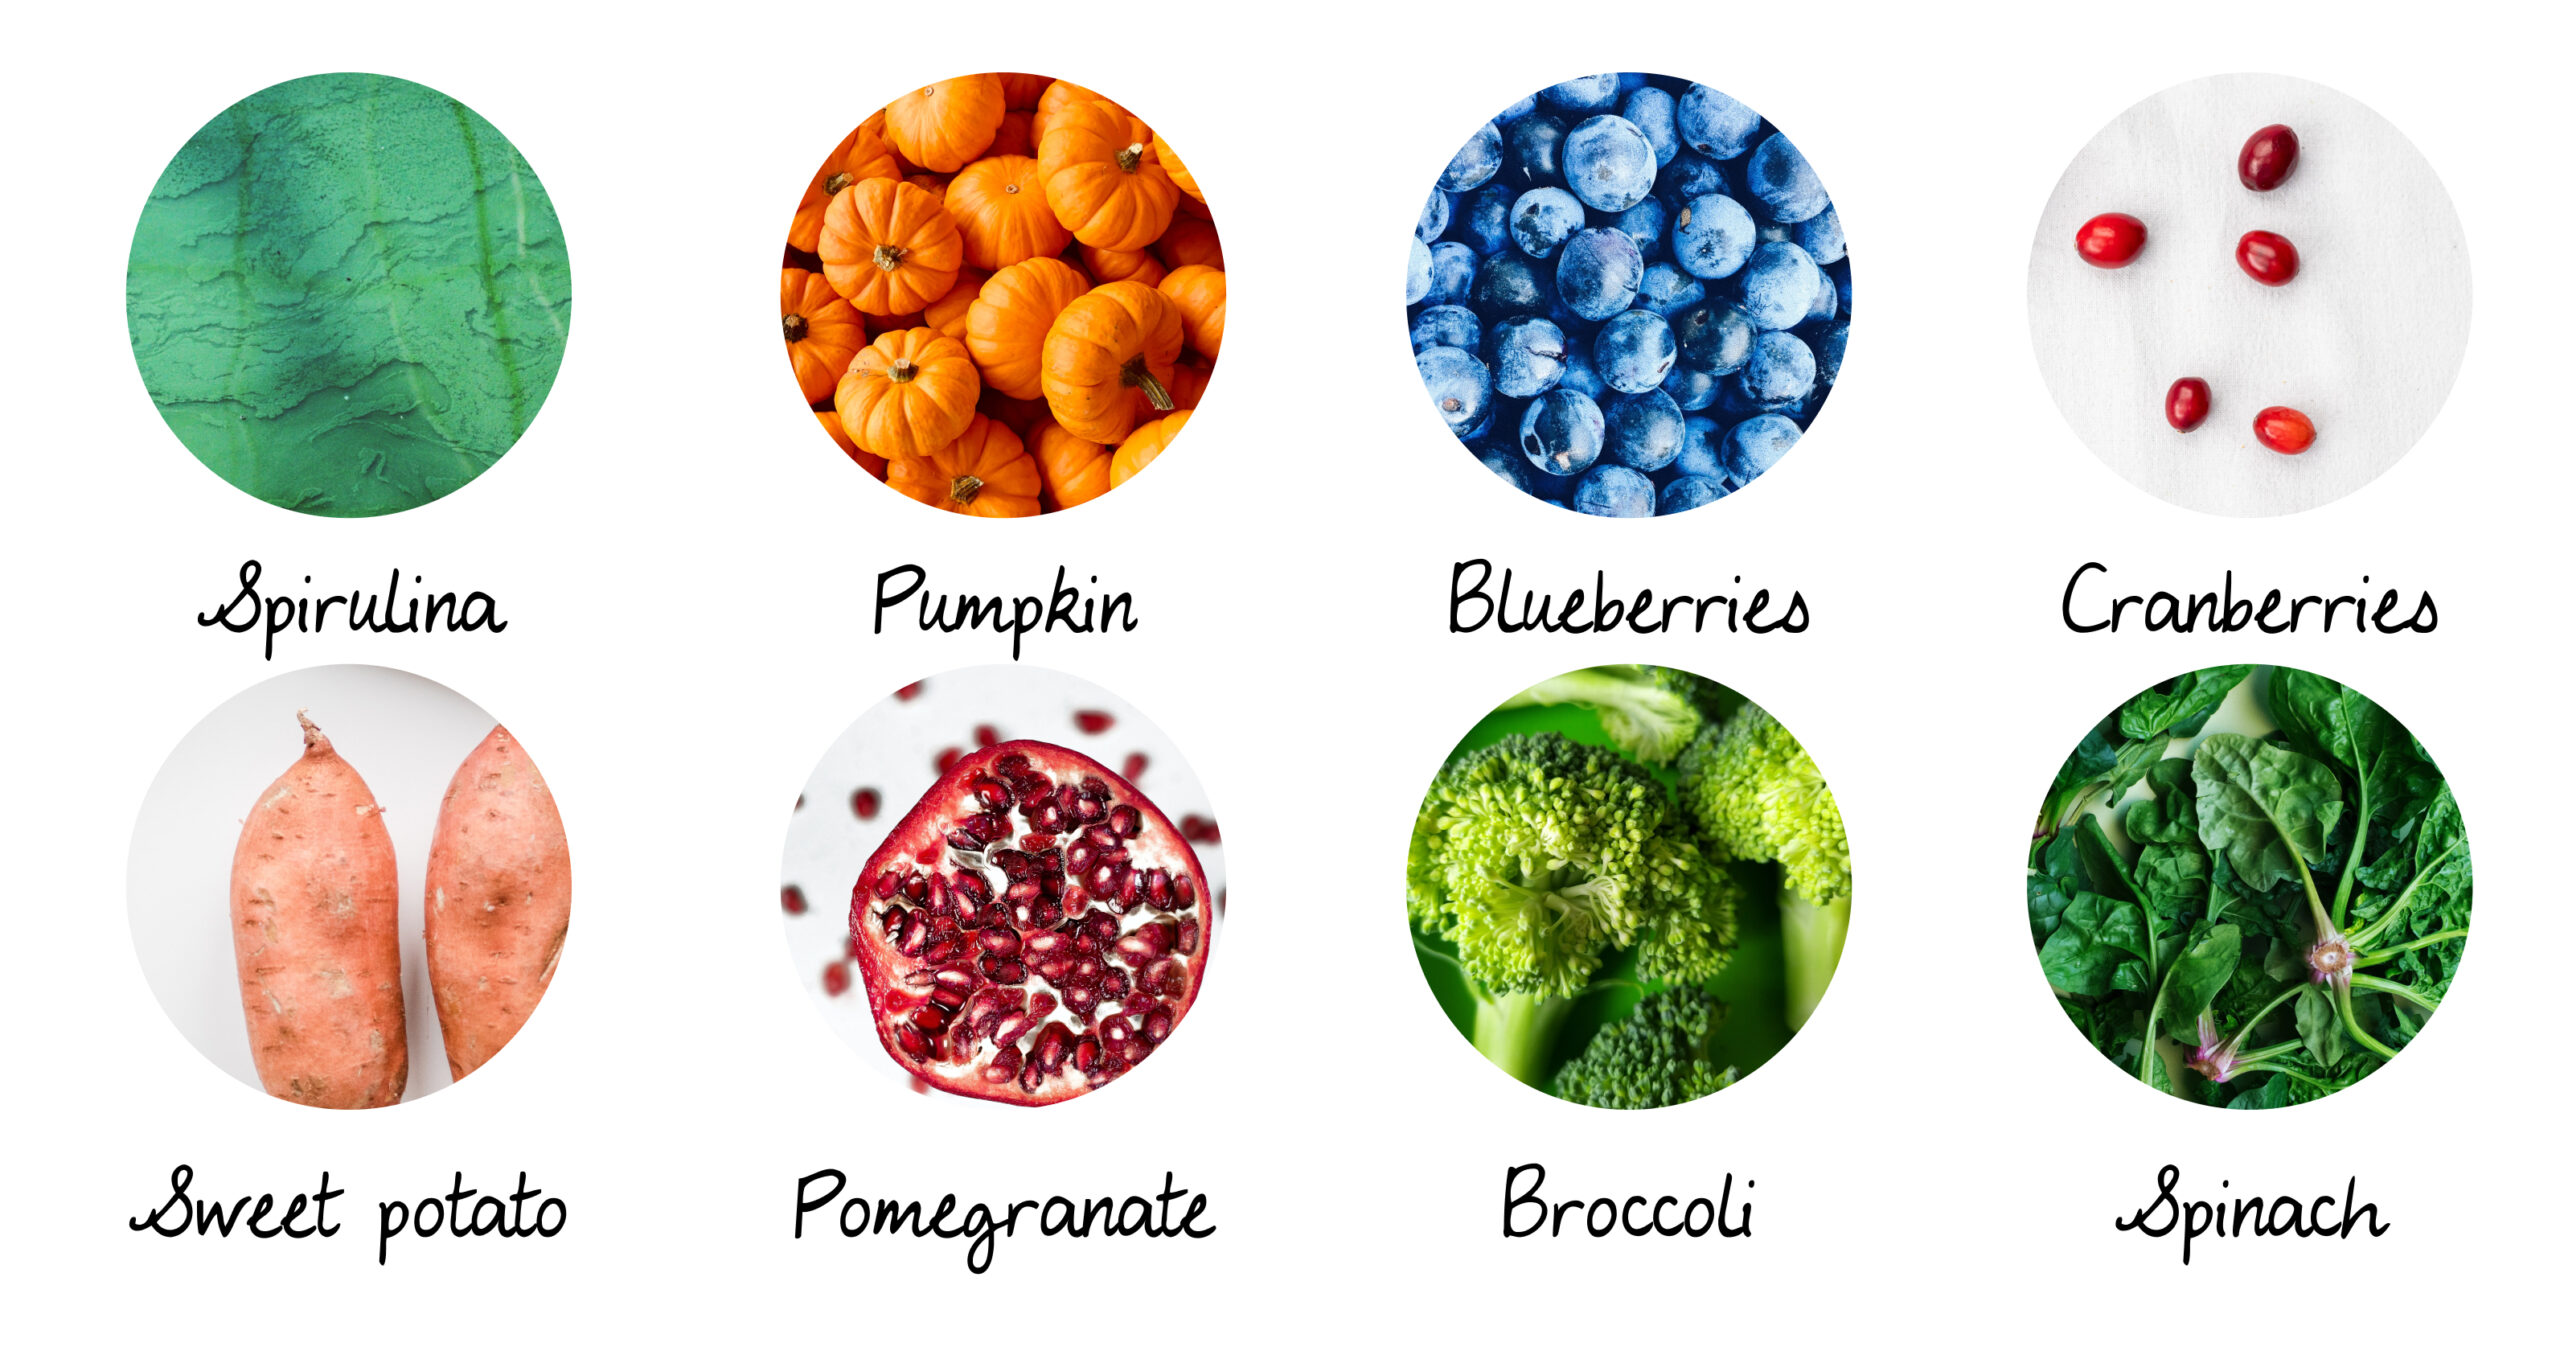 A list of superfood: spirulina, pumpkin, blueberries, cranberries, sweet potato, pomegranate, broccoli, spinach